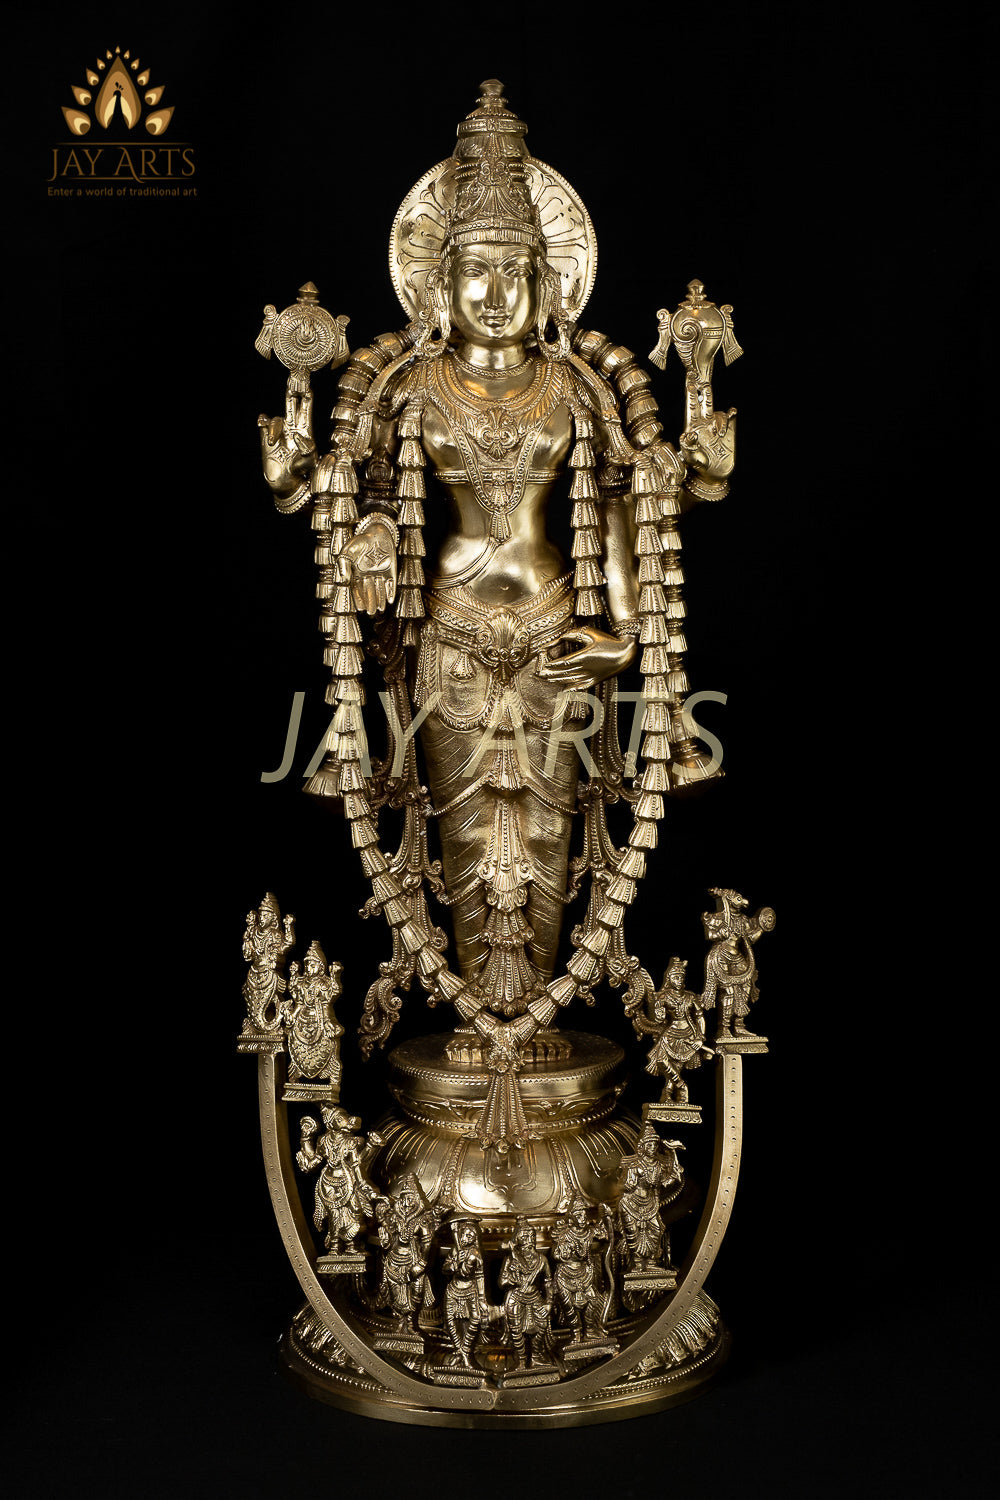 Srivaru (Lord Vishnu) and His Ten Incarnations - Bronze Statue 30"